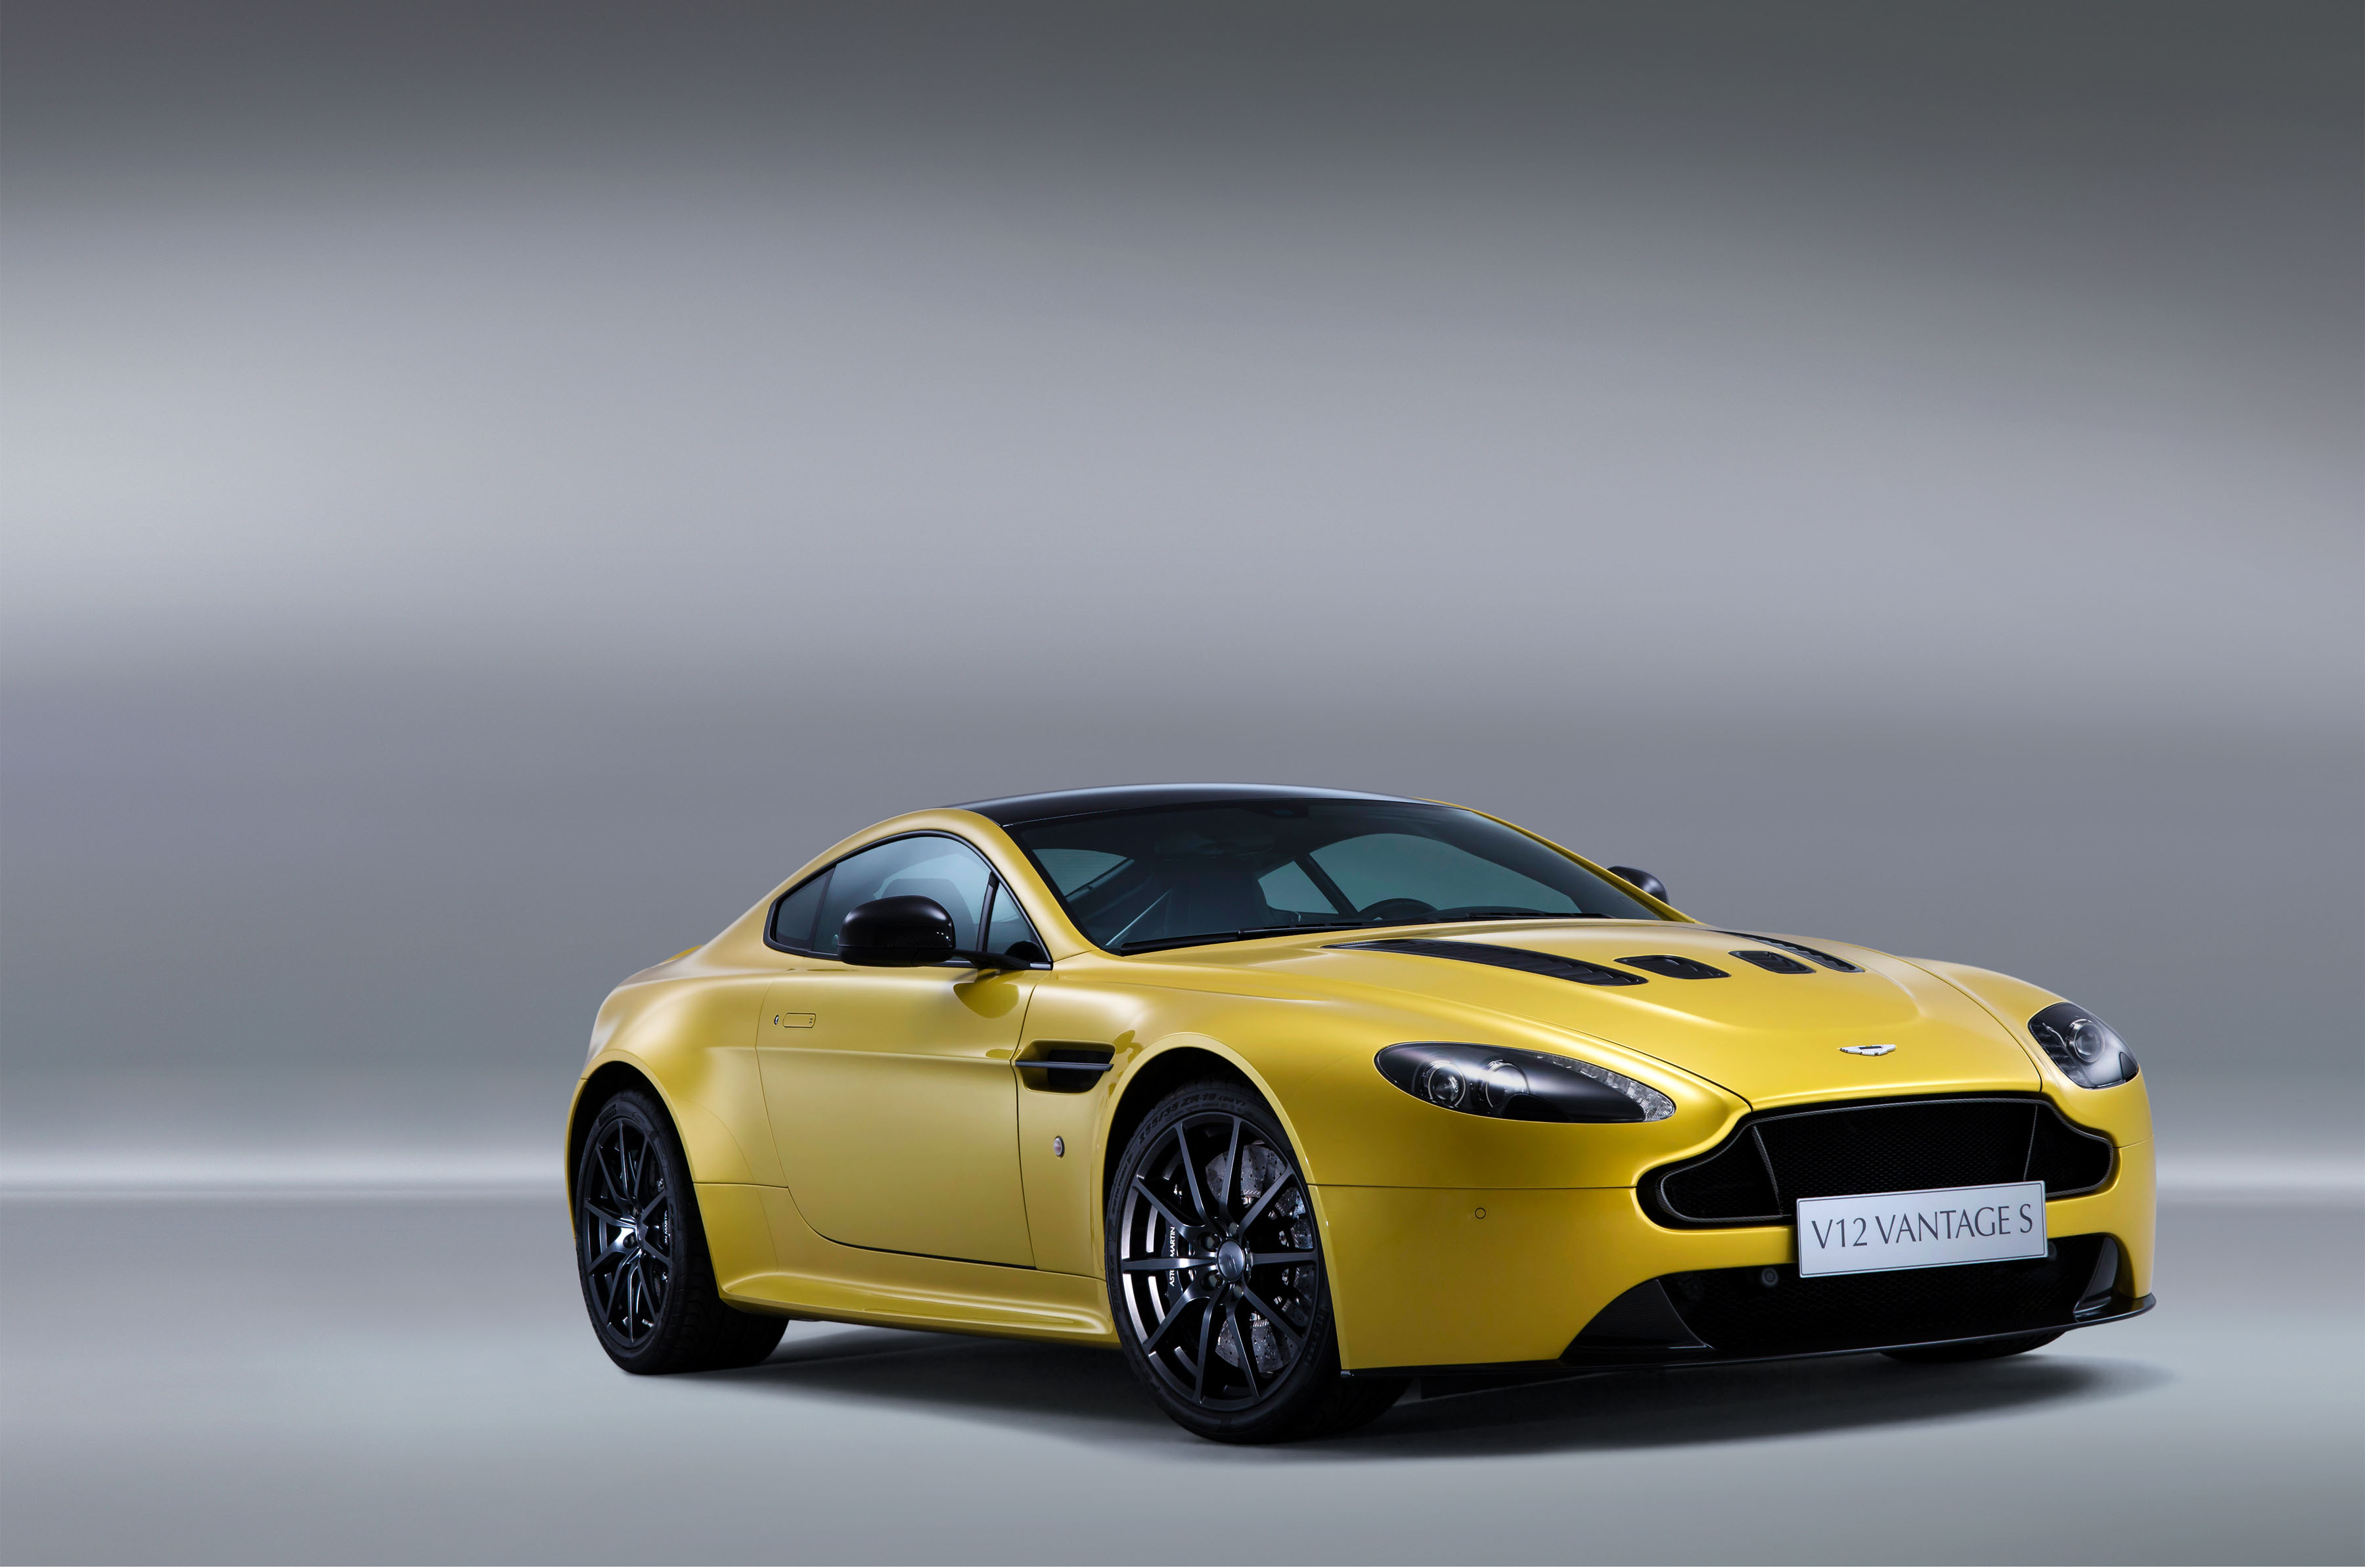 Aston Martin announces the V12 Vantage S – Fastest Aston ever – except for One 77